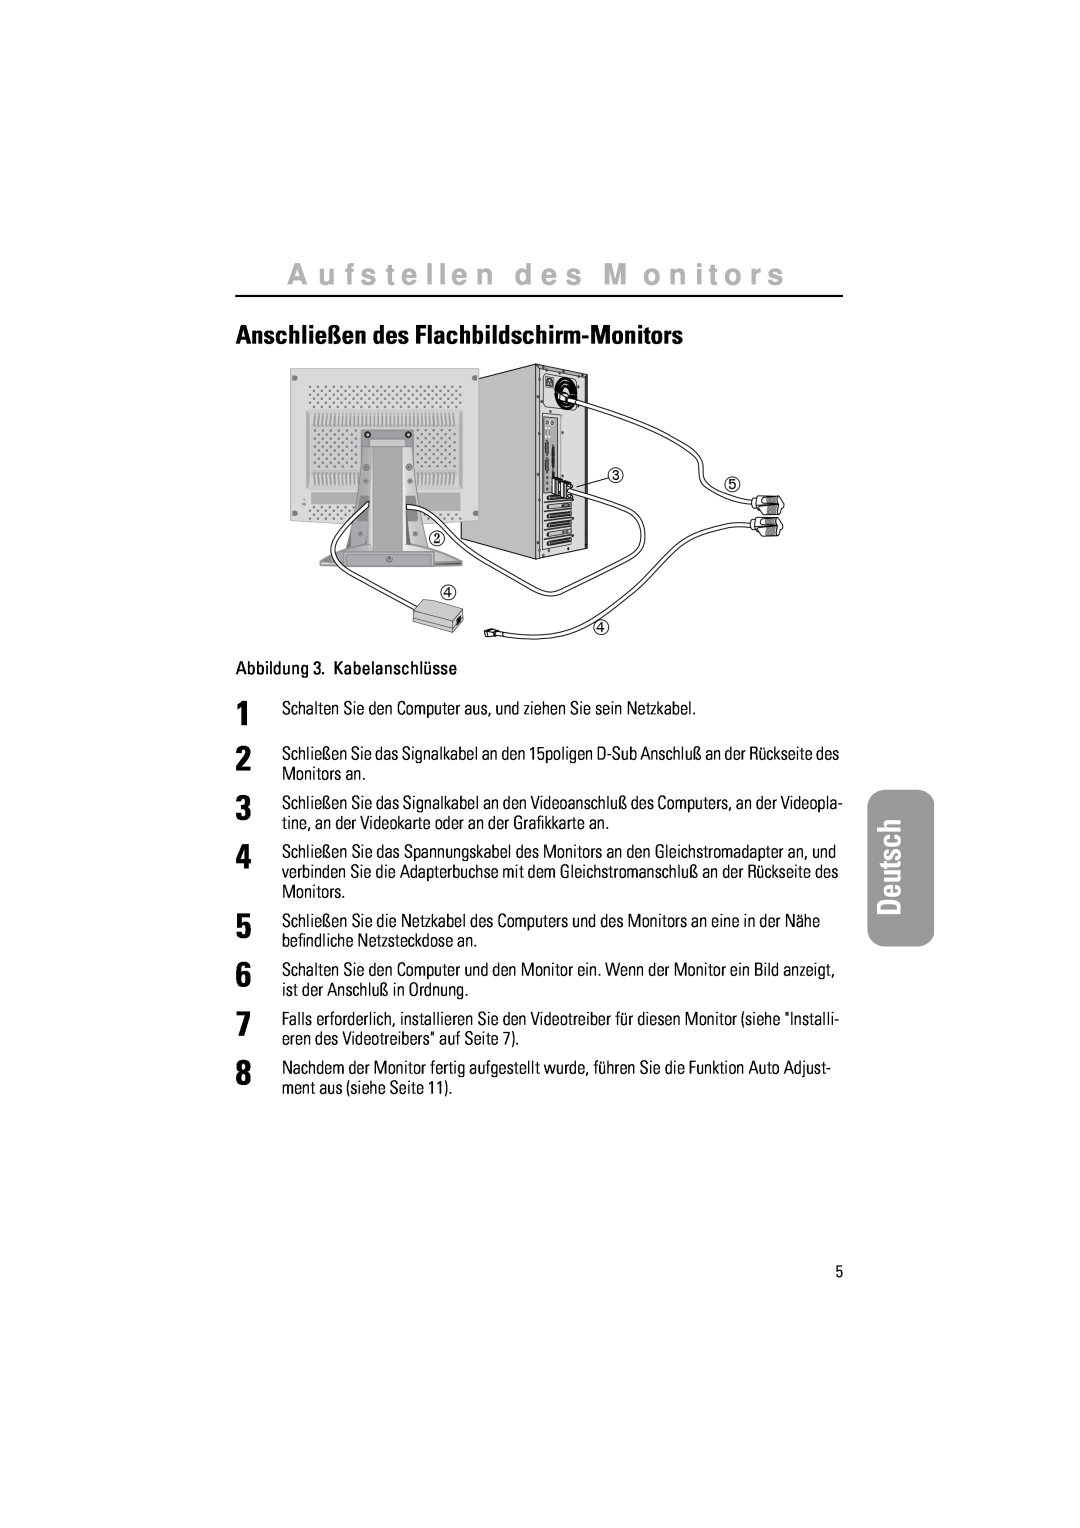 Samsung RN15LSBAN/EDC, 570STFT manual Anschließen des Flachbildschirm-Monitors, Abbildung 3. Kabelanschlüsse, Deutsch 